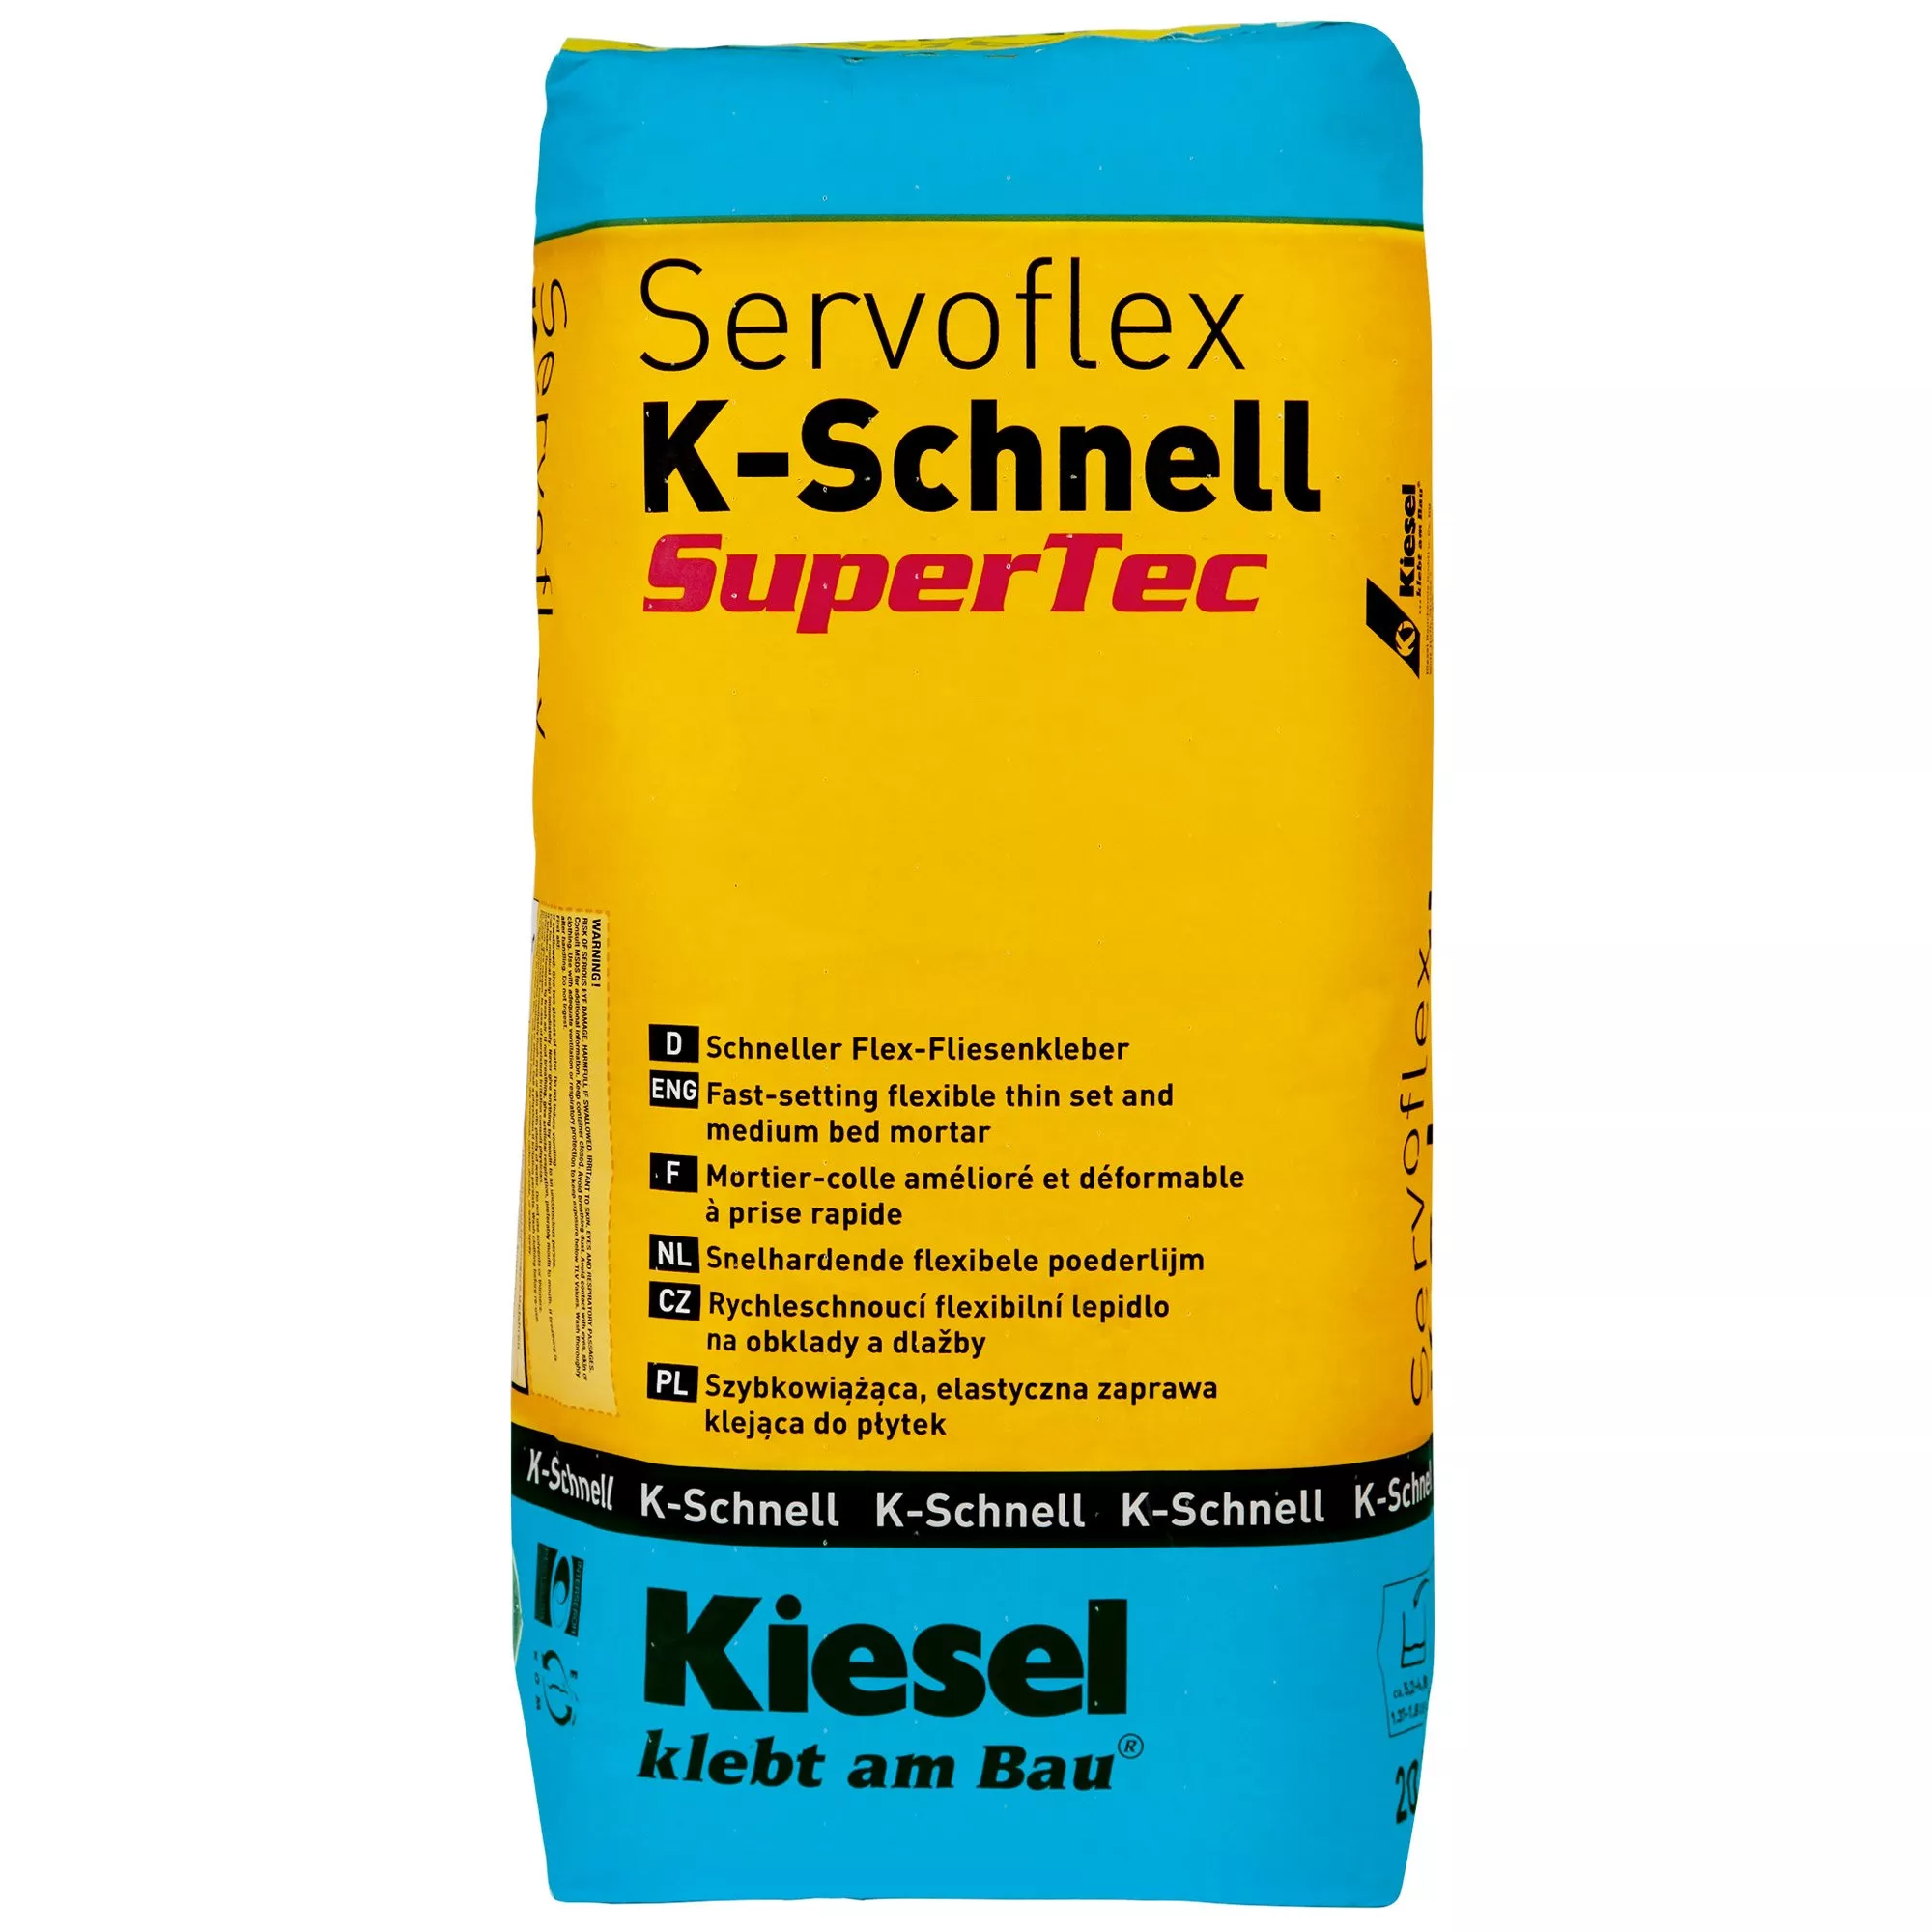 Kiesel Servoflex K-Schnell - καλύμματα μεγάλου μεγέθους, γρήγορη κόλλα πλακιδίων (20 kg)